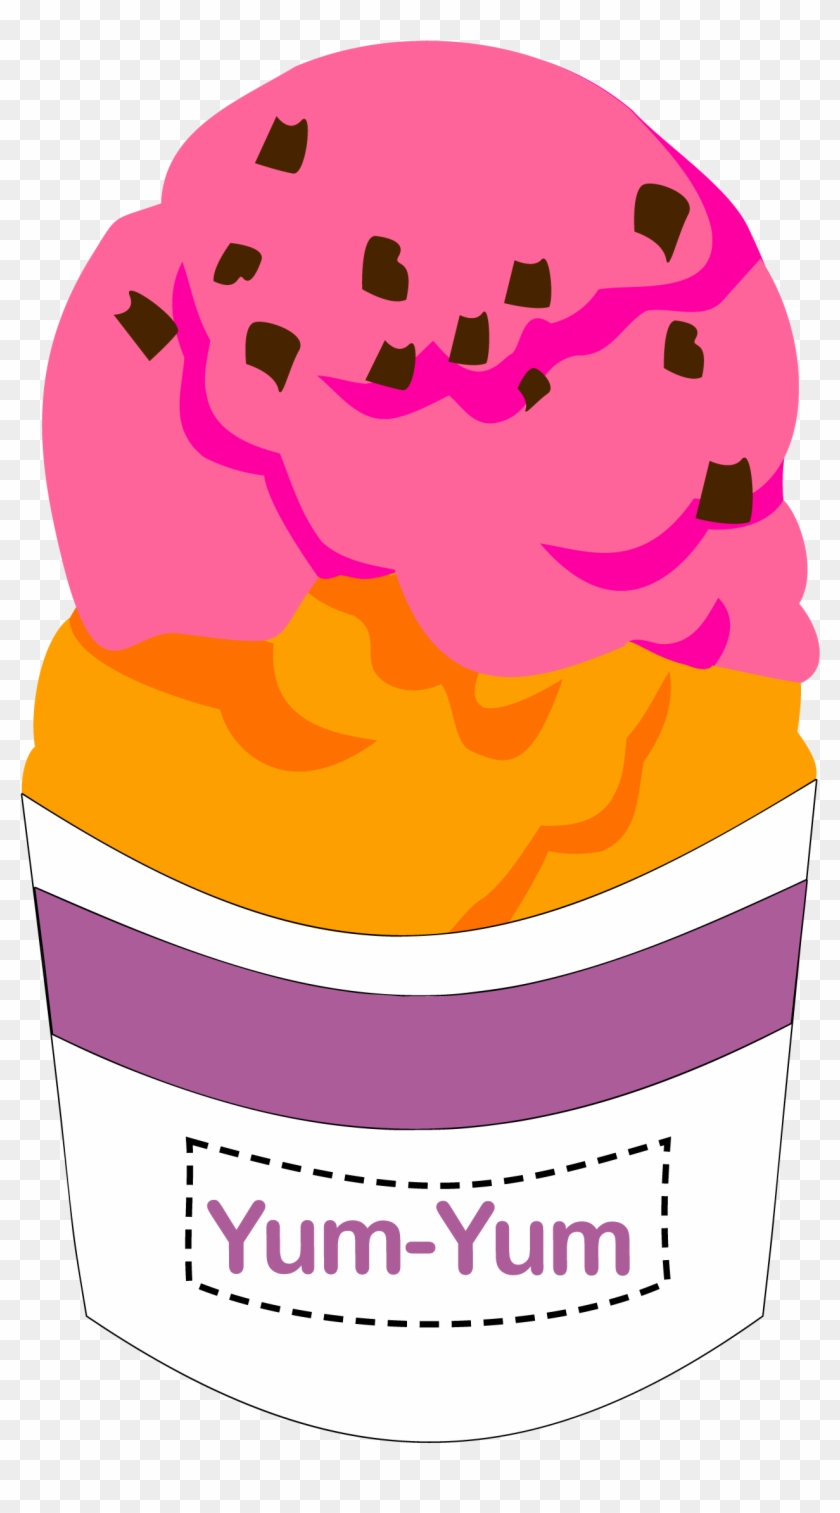 10 Ice Cream Clipart Nº2 - Ice Cream Bowl Clipart Transparent Background #170368